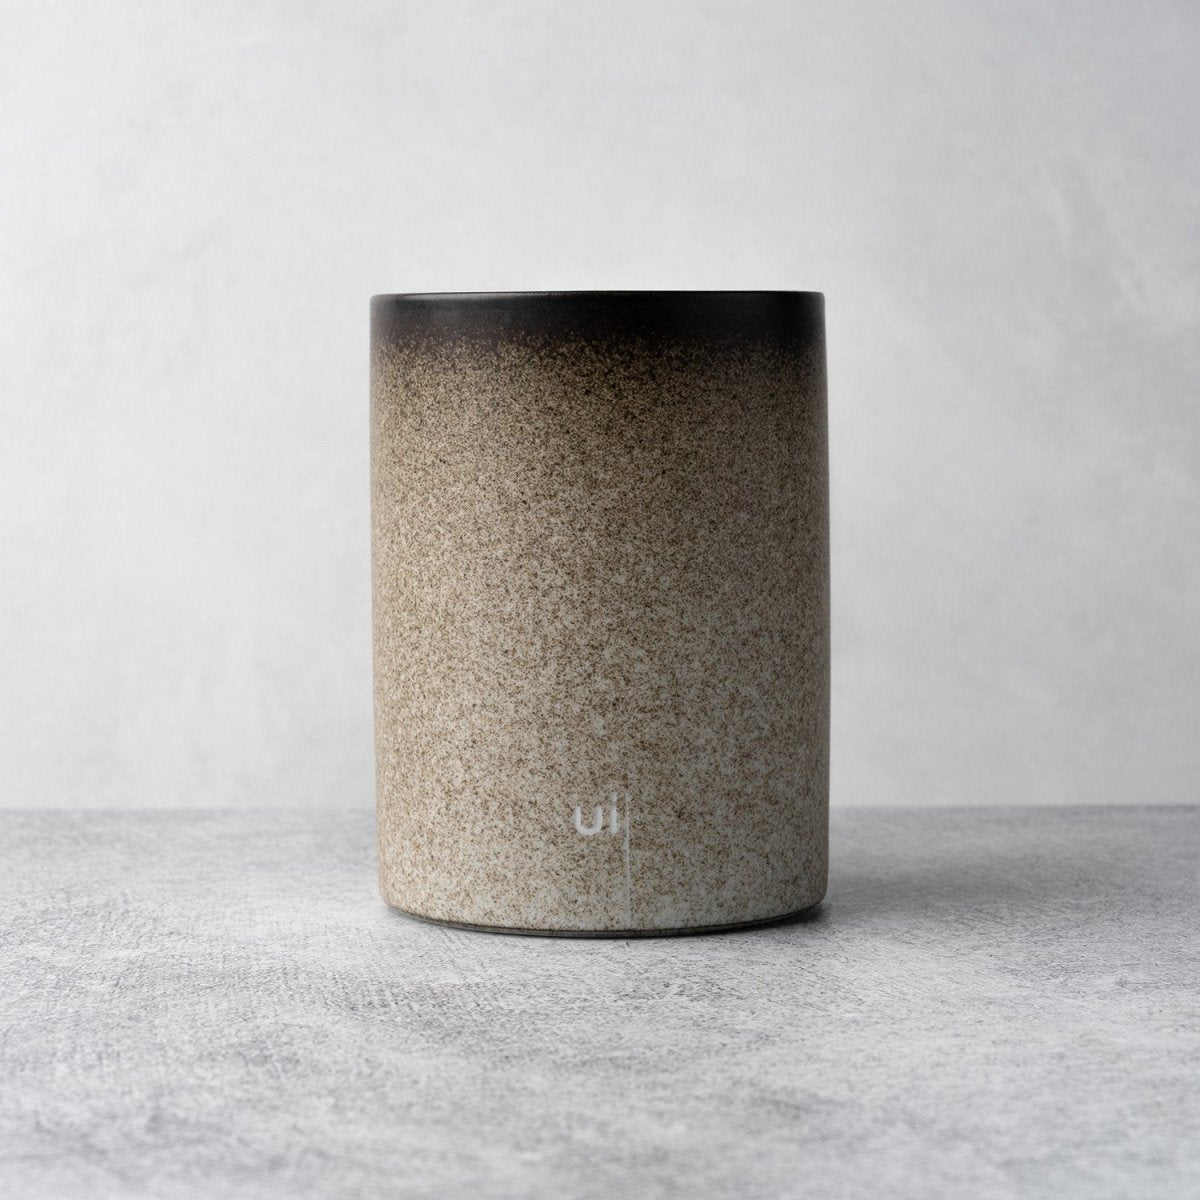 OHOM Ui Mug Artist Collection Self Heating Mug - lily & onyx